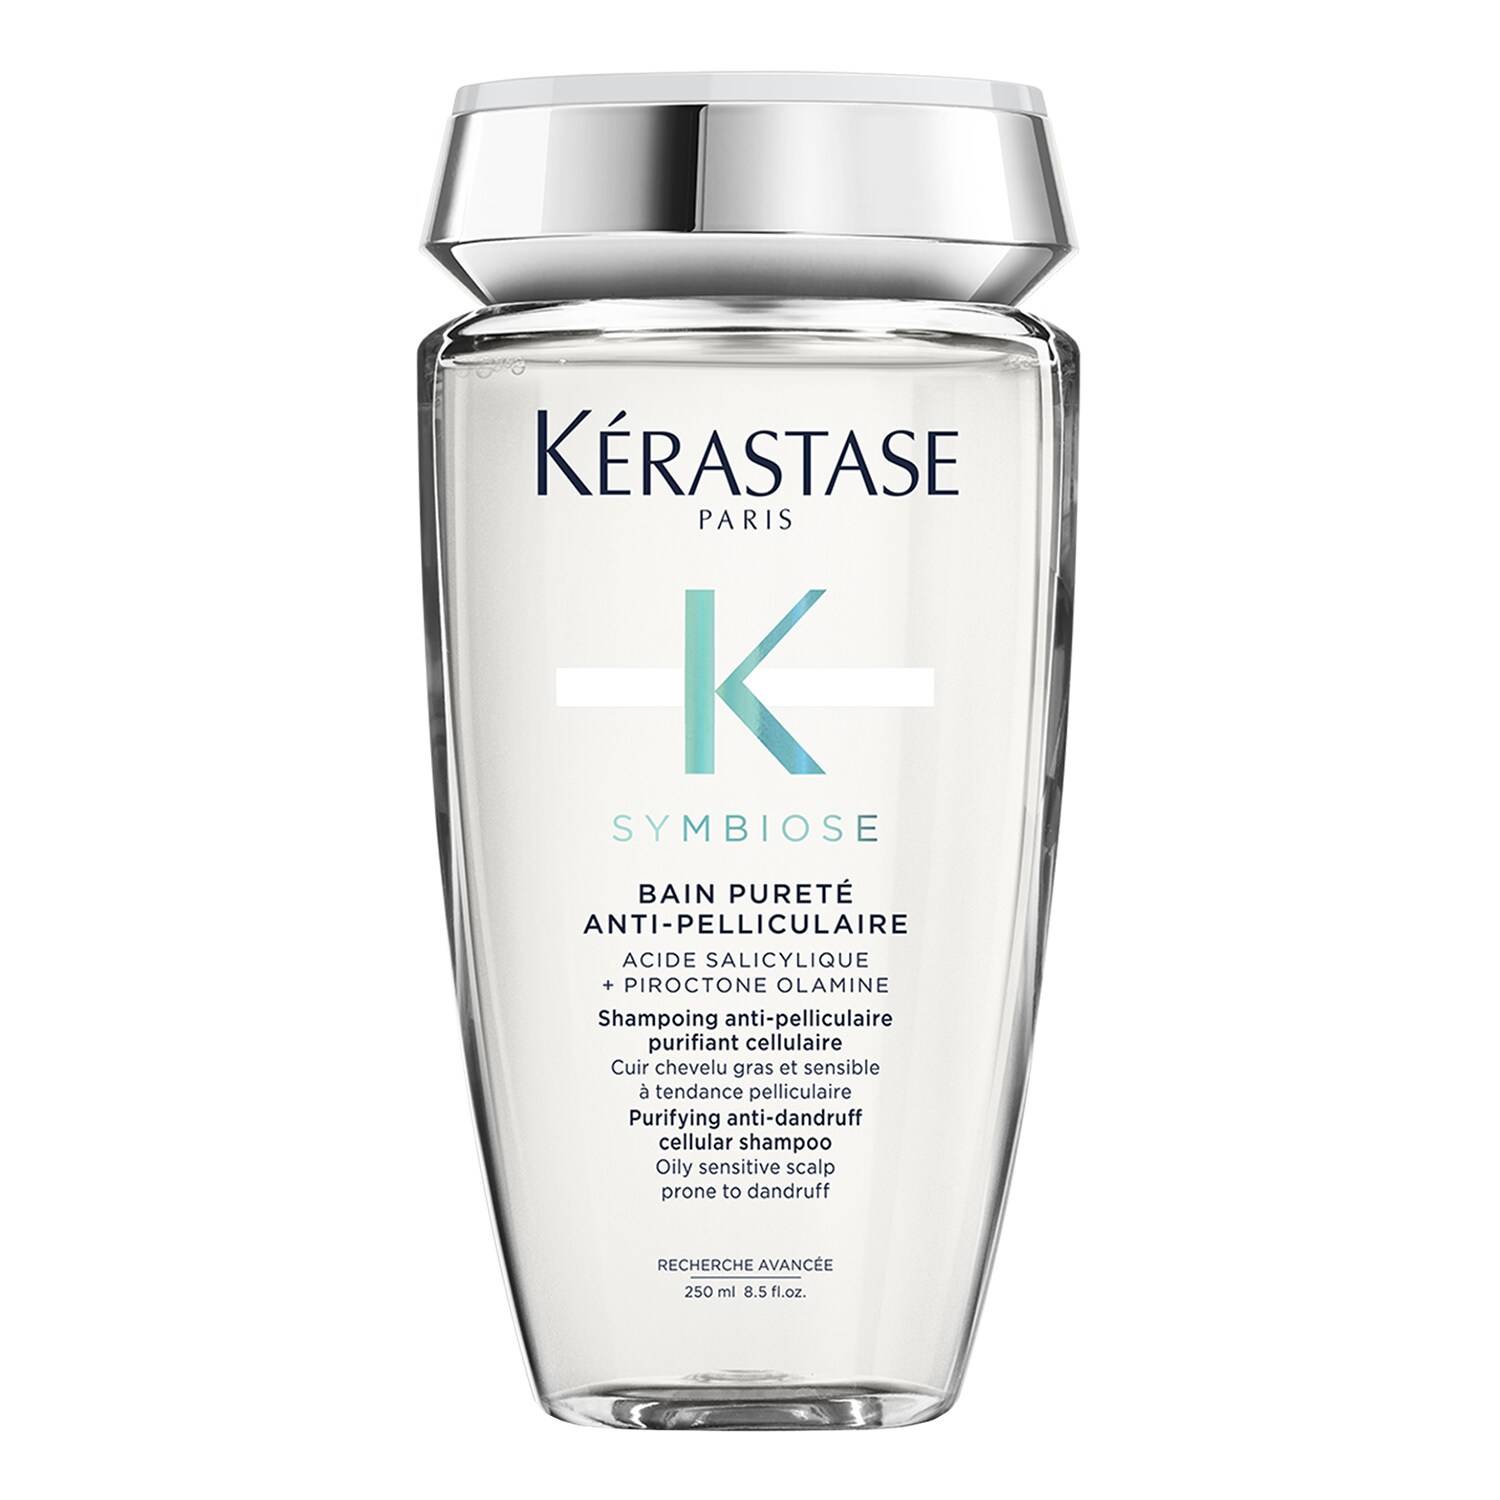 K�RASTASE Symbiose Purifying Anti-Dandruff Cellular Shampoo - Purifying shampoo 250ml